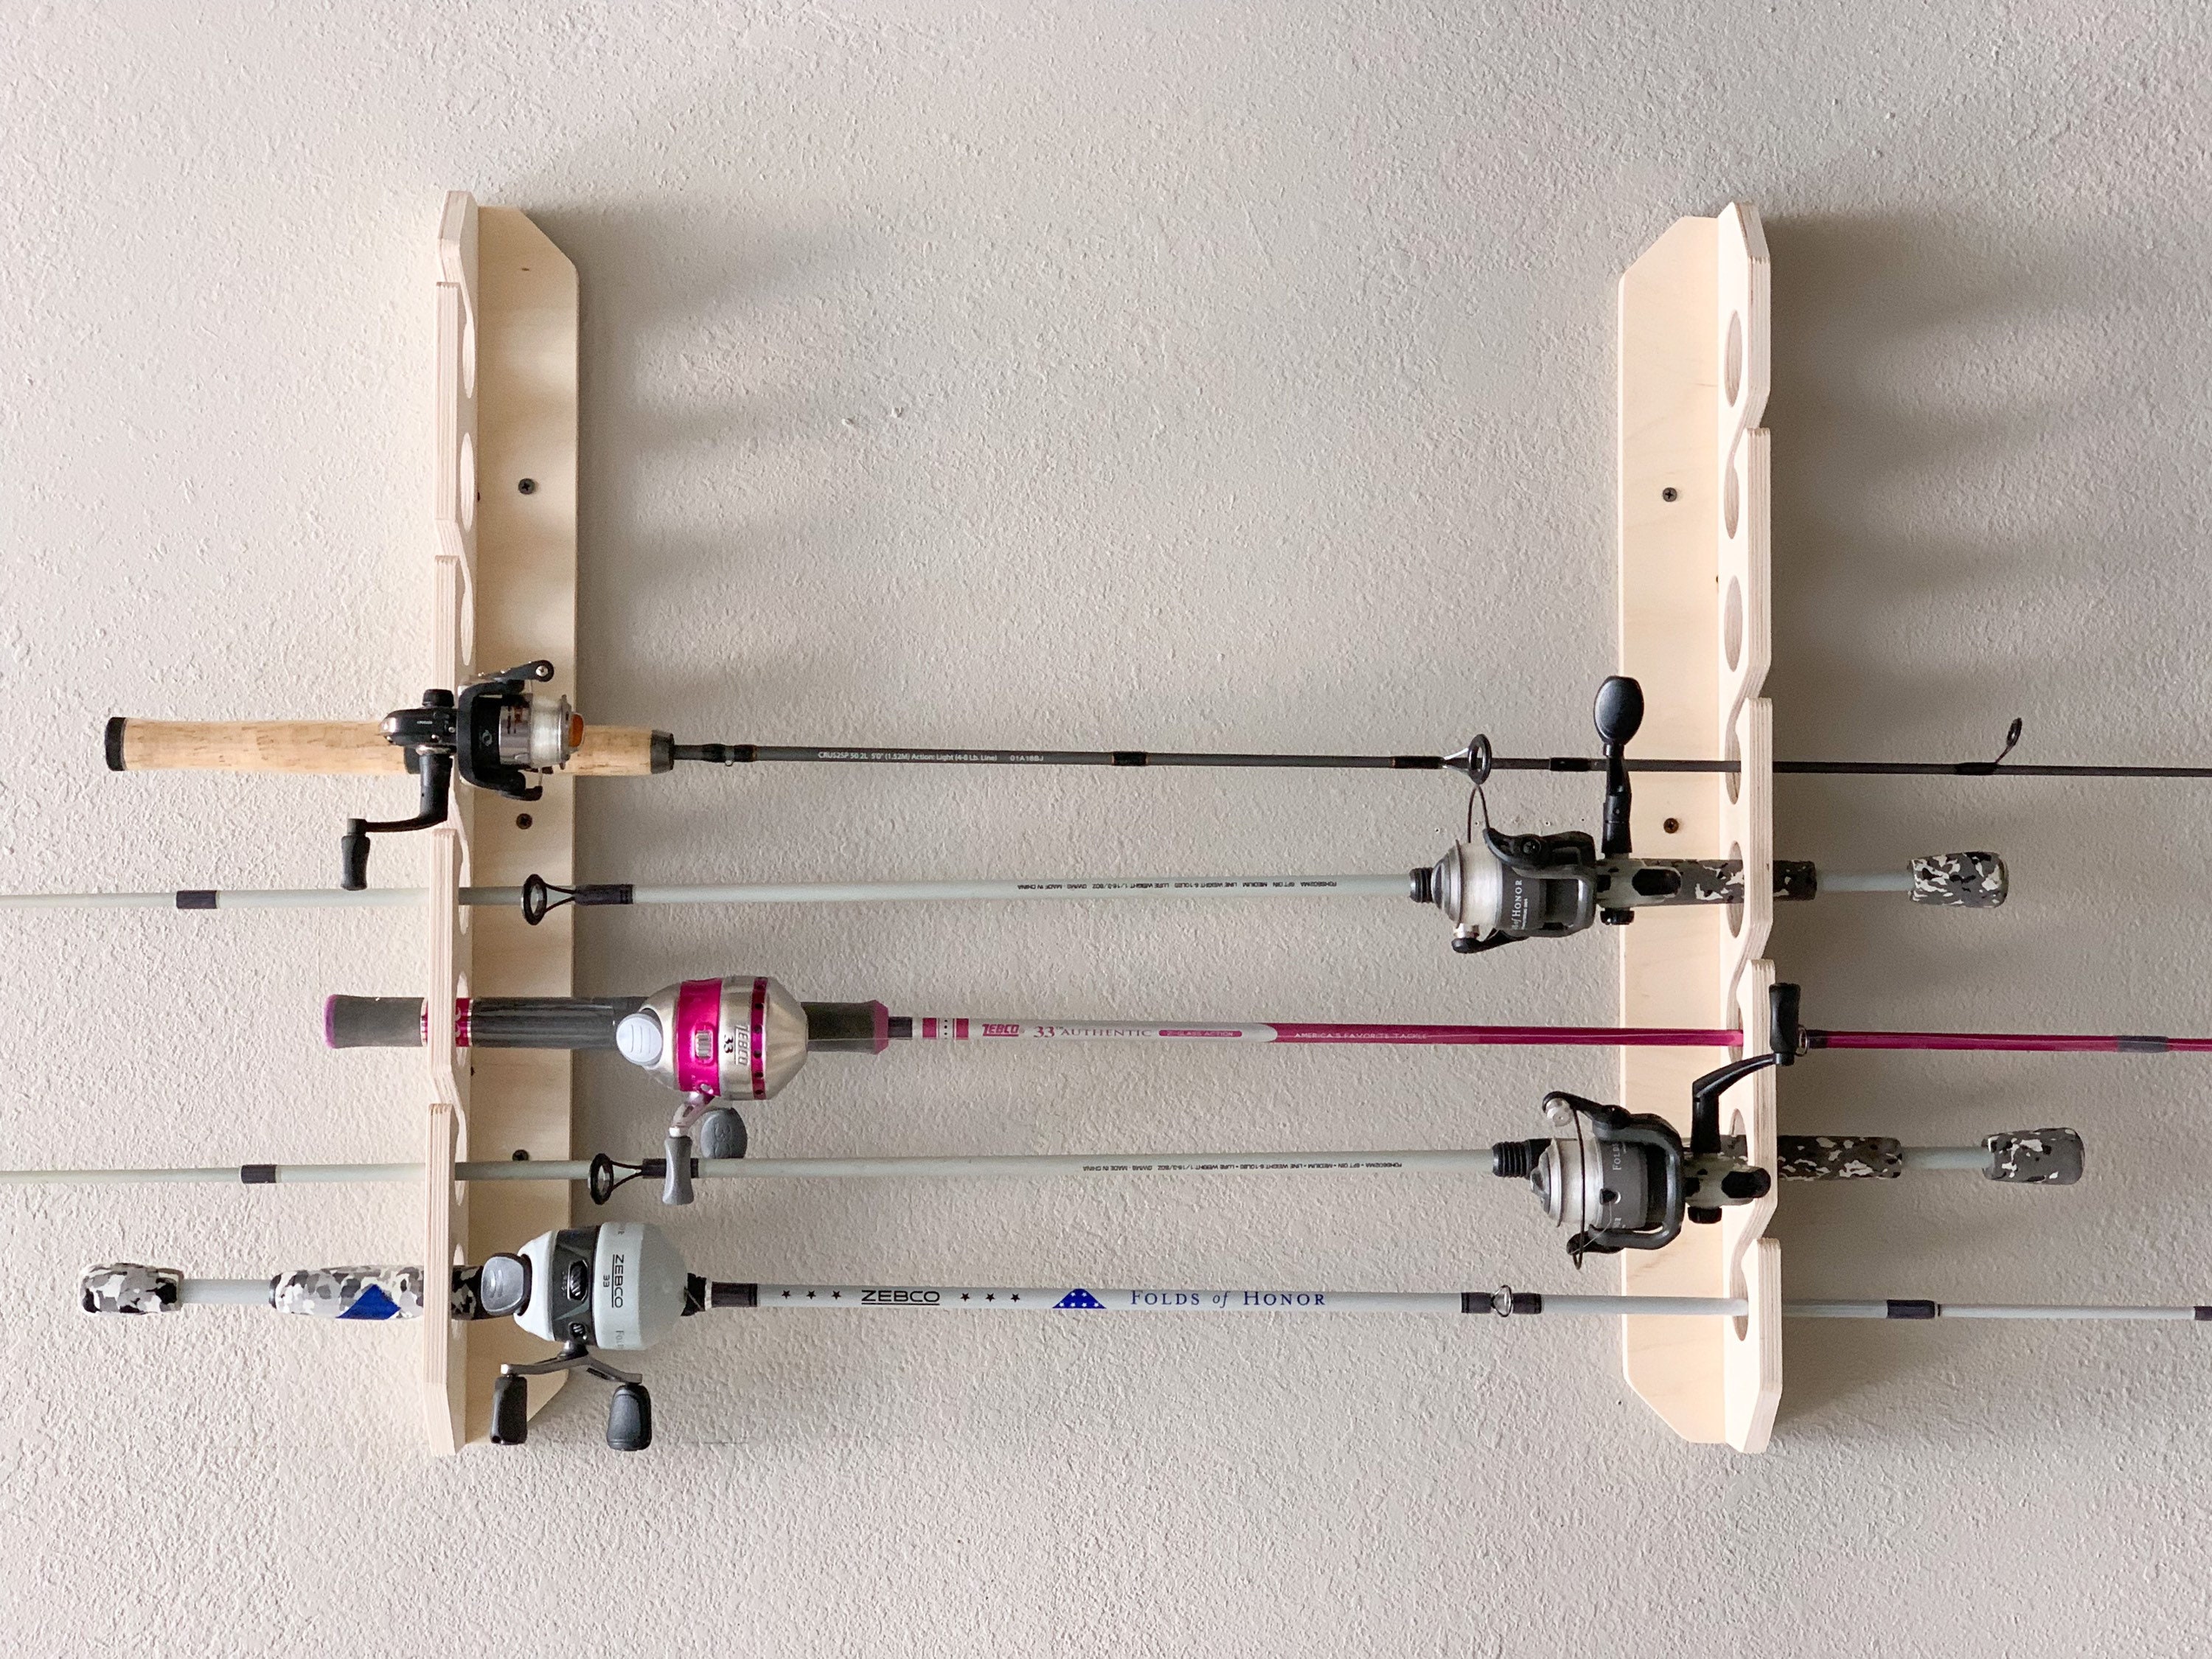 YYST Horizontal Fishing Rod Storage Rack Holder Wall Mount - Hold 4 Fishing  Rods W Screws - No Fishing Rod : : Sports, Fitness & Outdoors